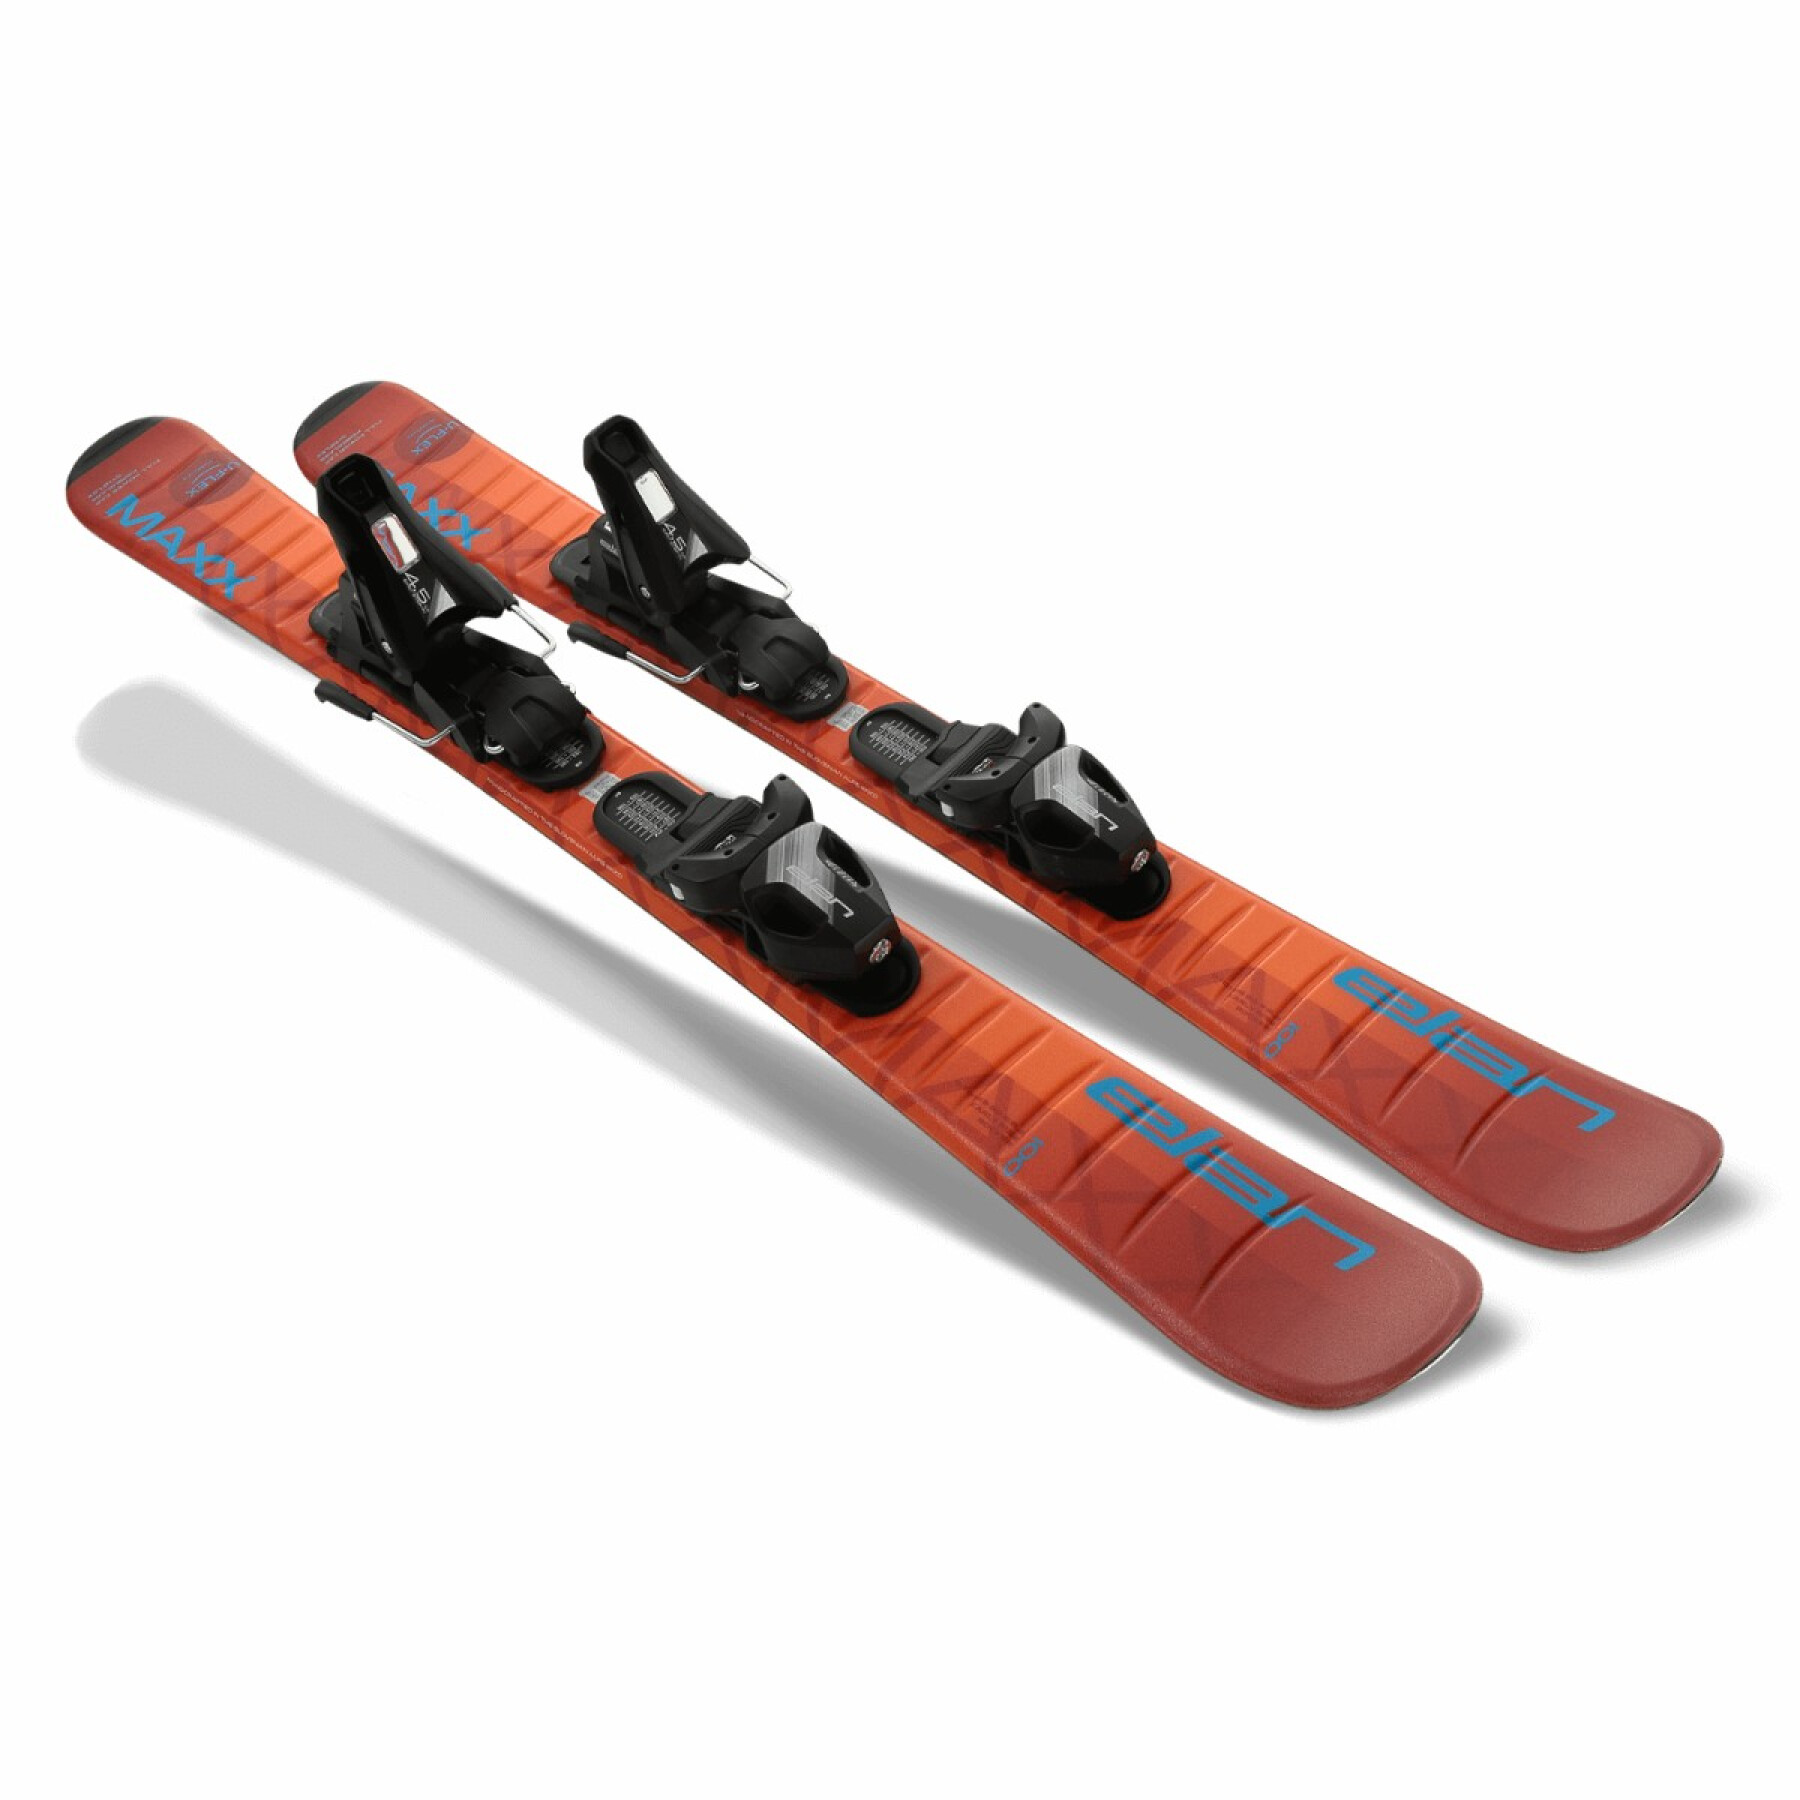 Pack maxx shift el 4.5 skis with child bindings Elan